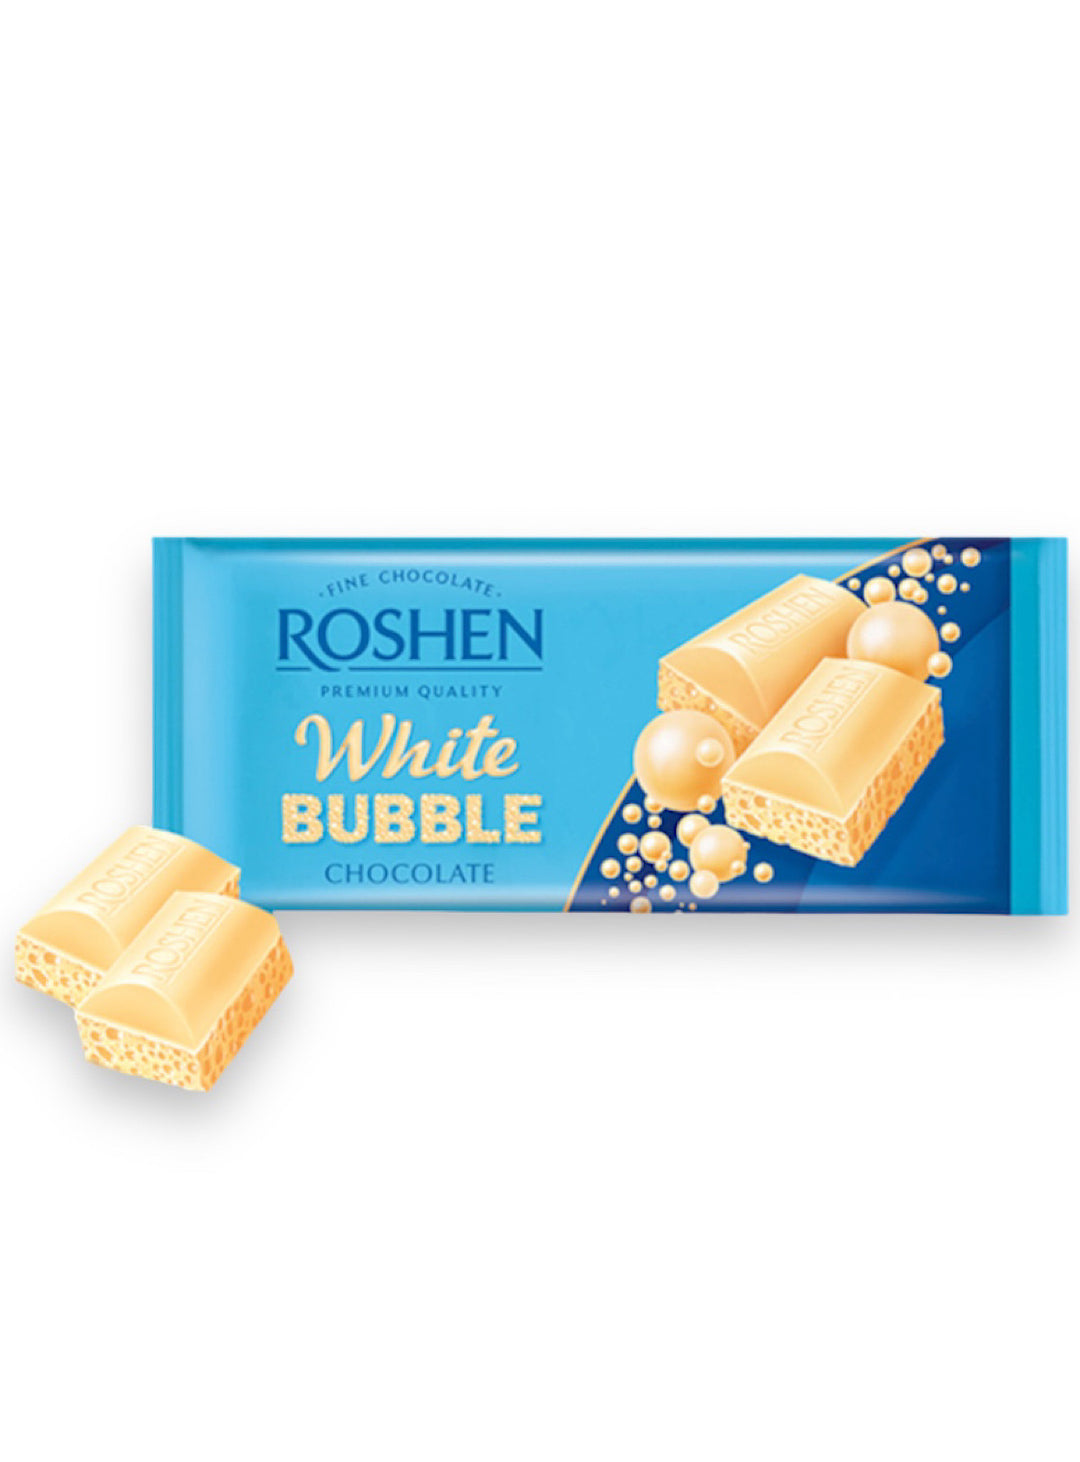 White Chocolate Bubble Bar - Roshen - 80g